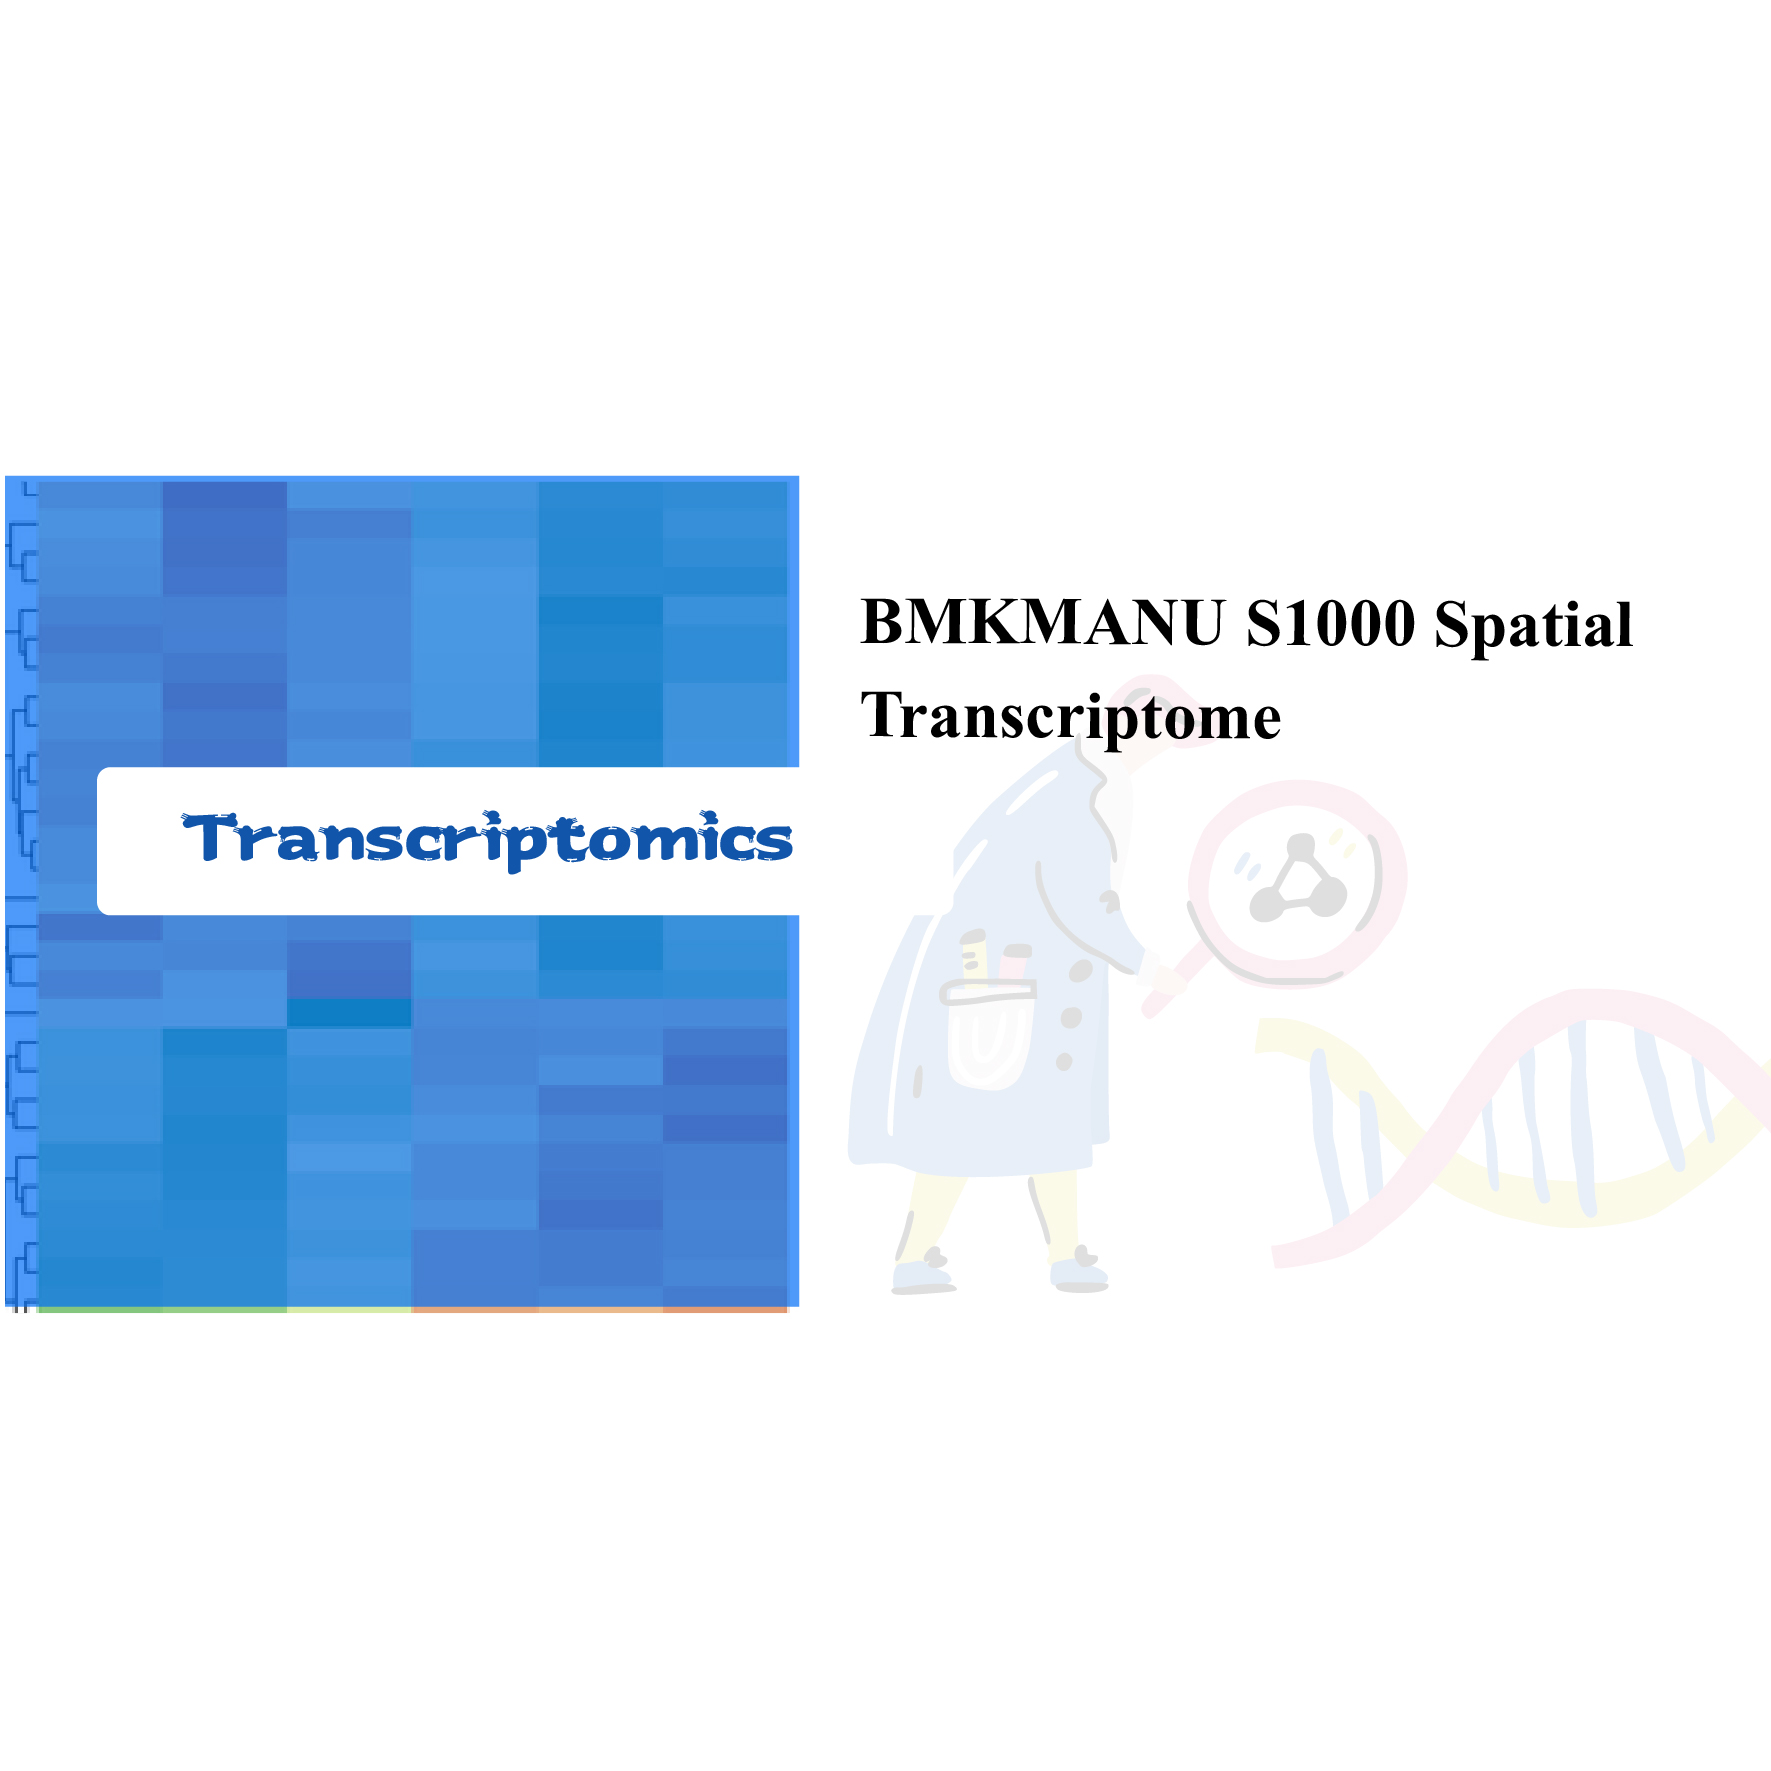 Transkriptom Spasial BMKMANU S1000